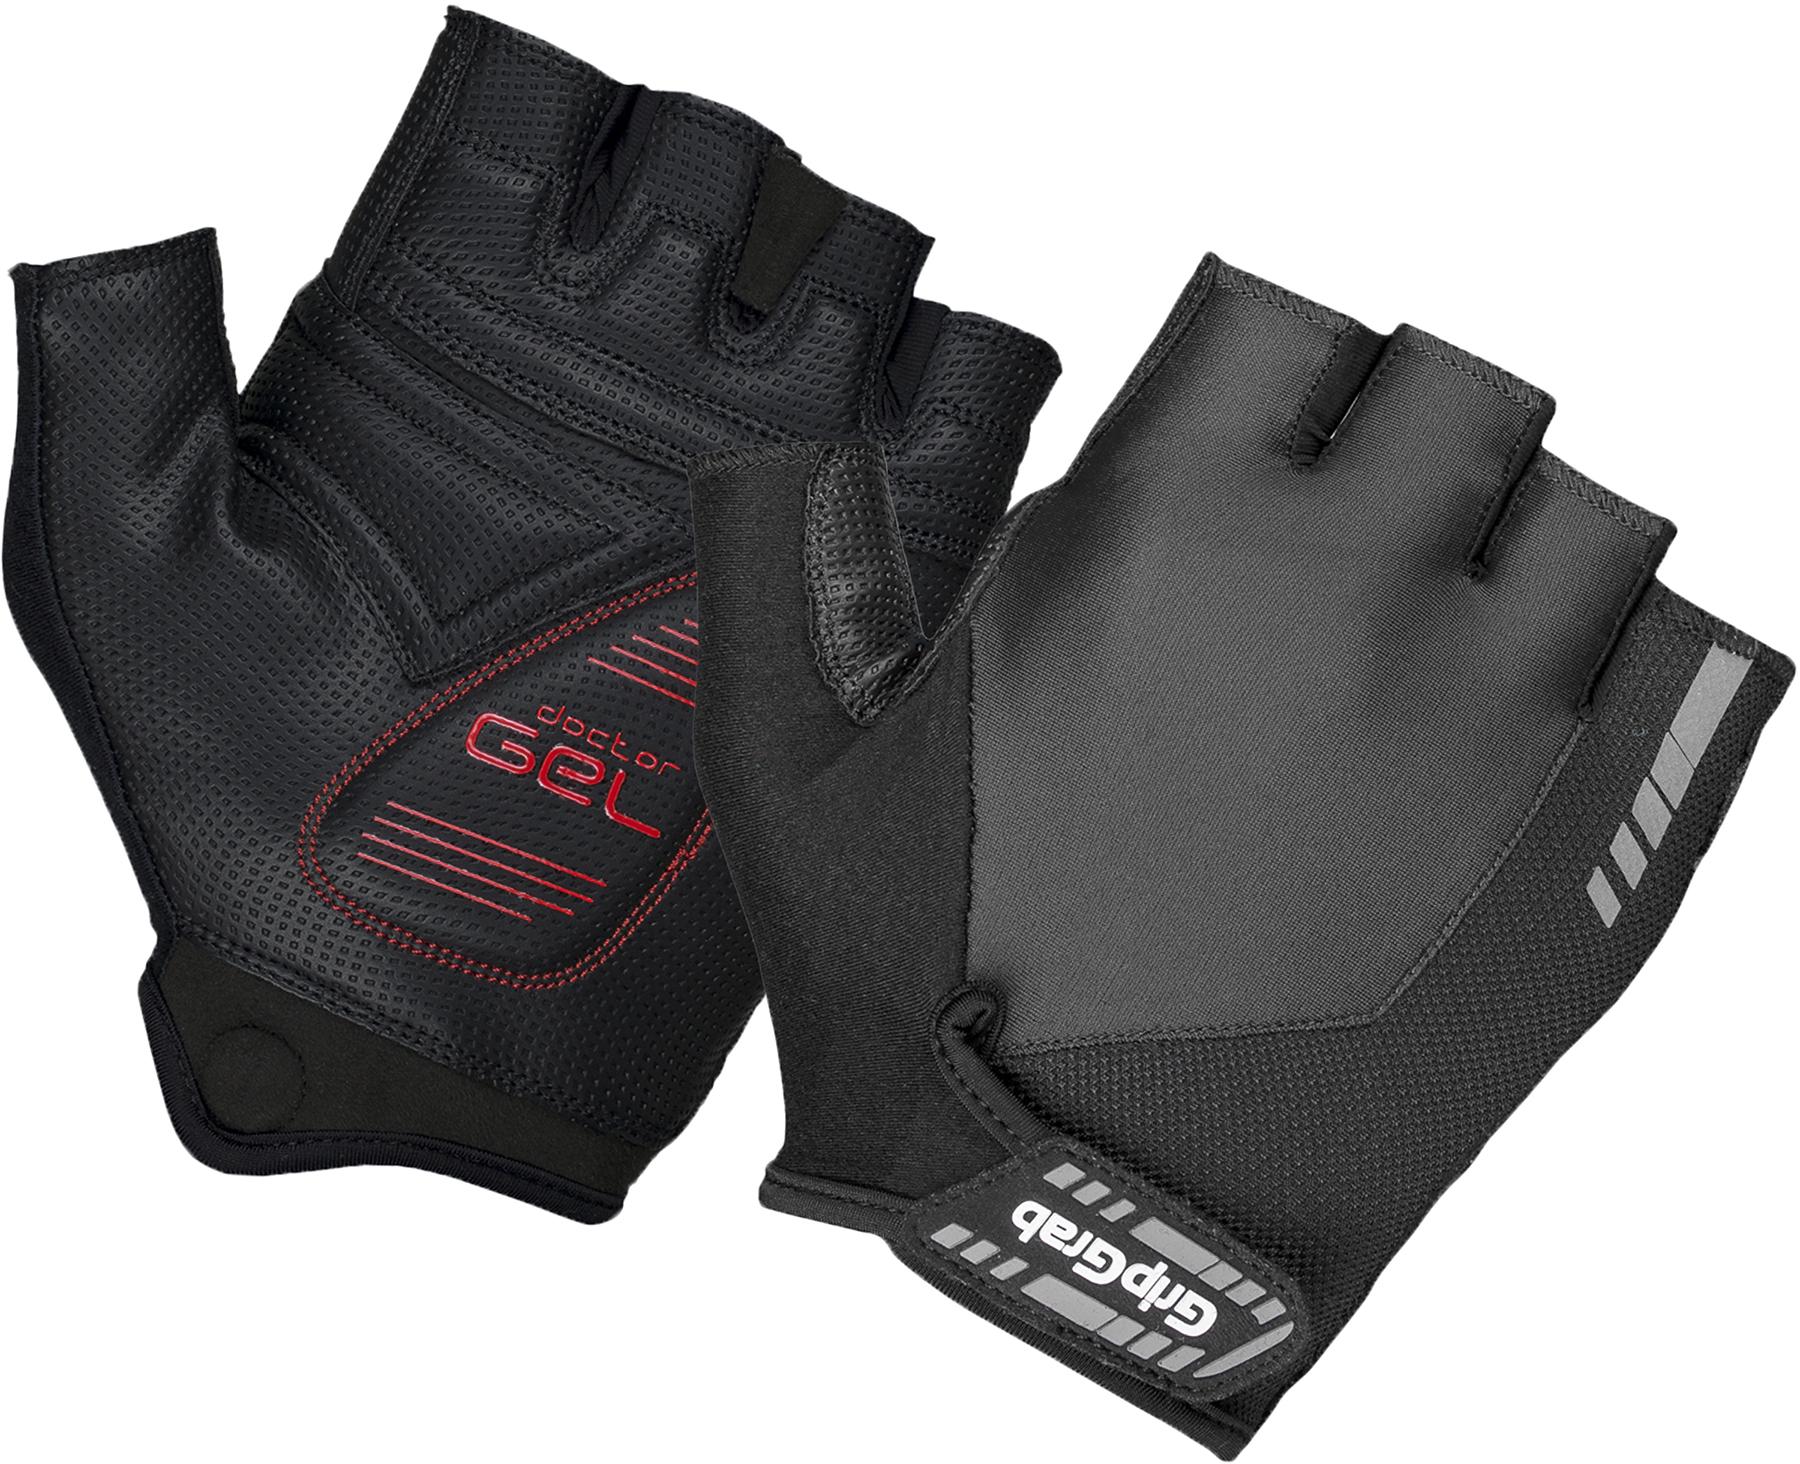 Gripgrab Progel Padded Glove - Black